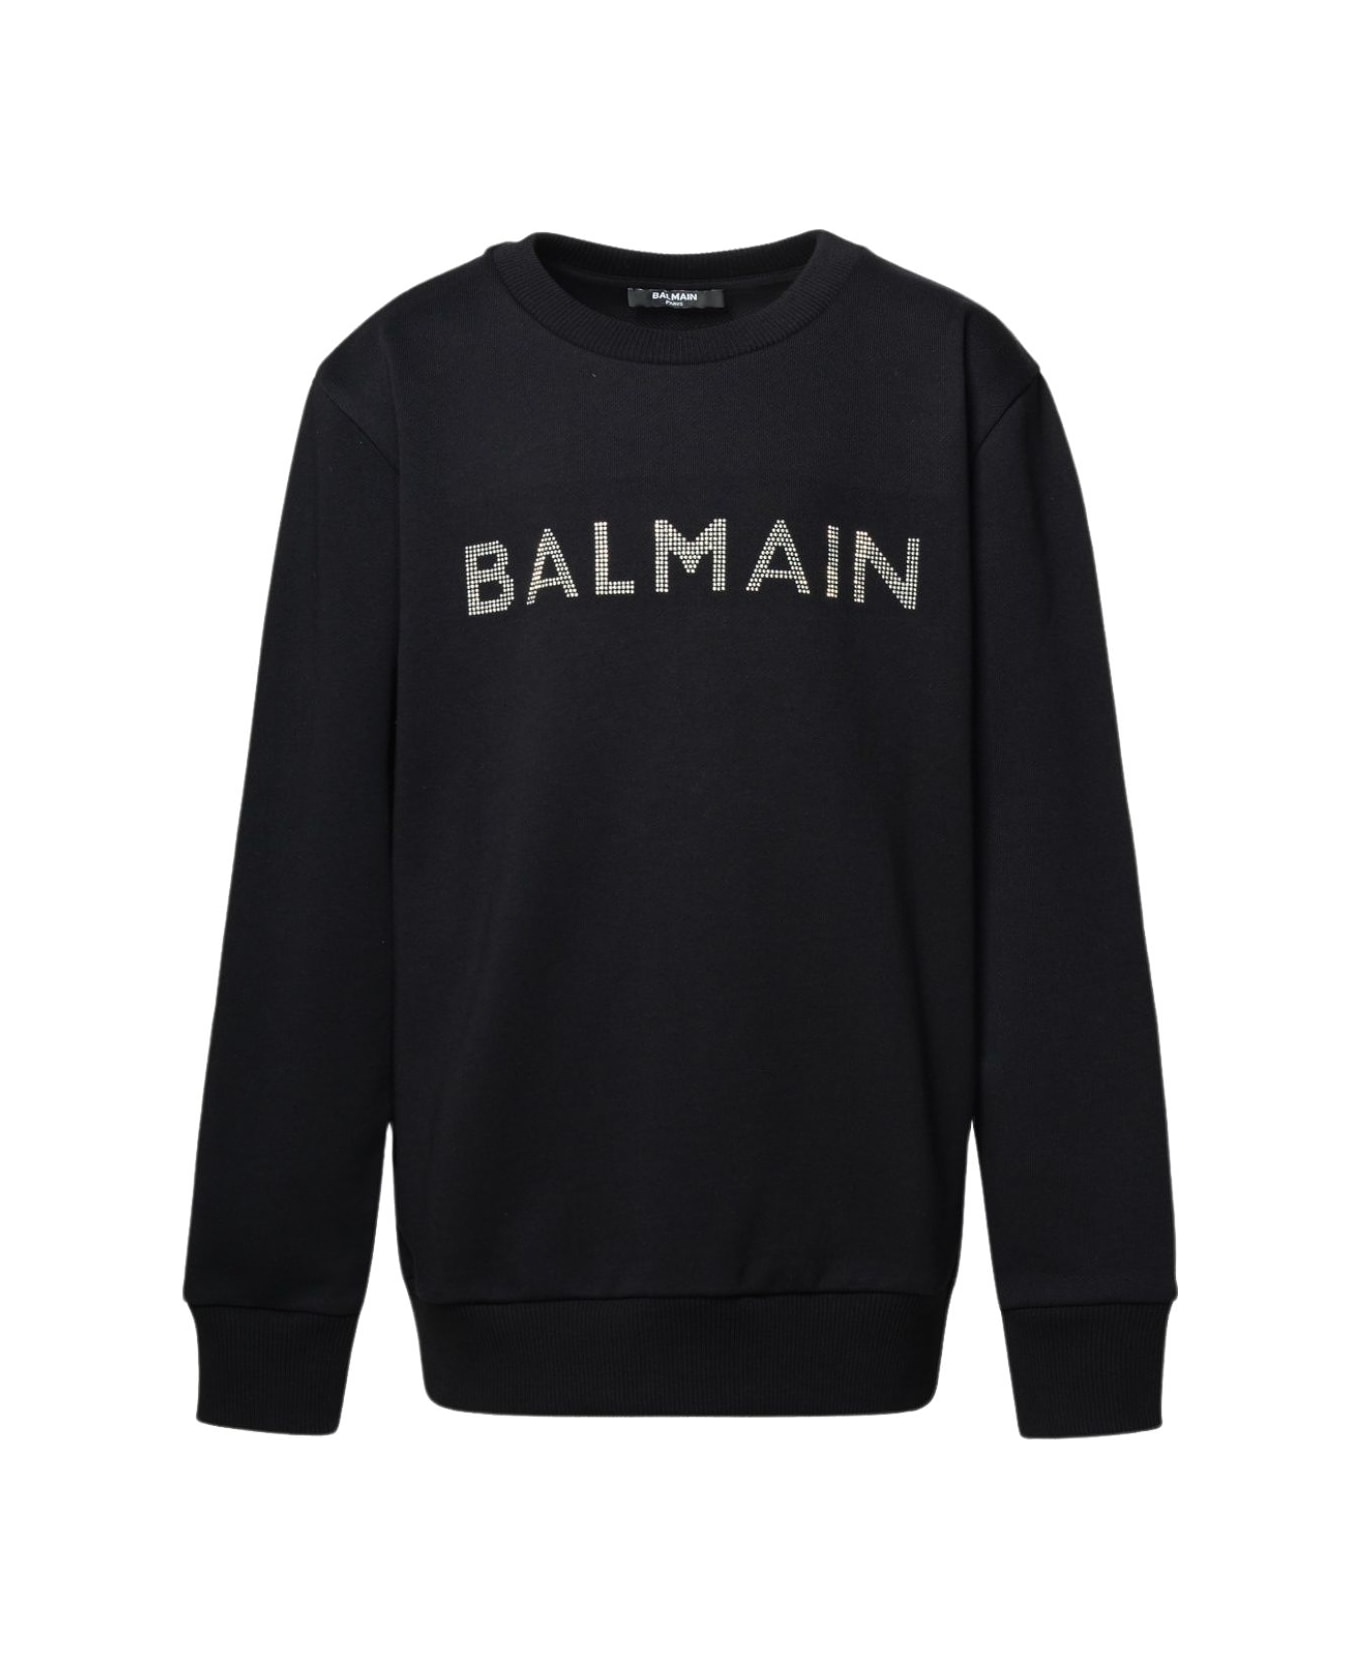 Balmain Sweatshirt - Ag Black Silver